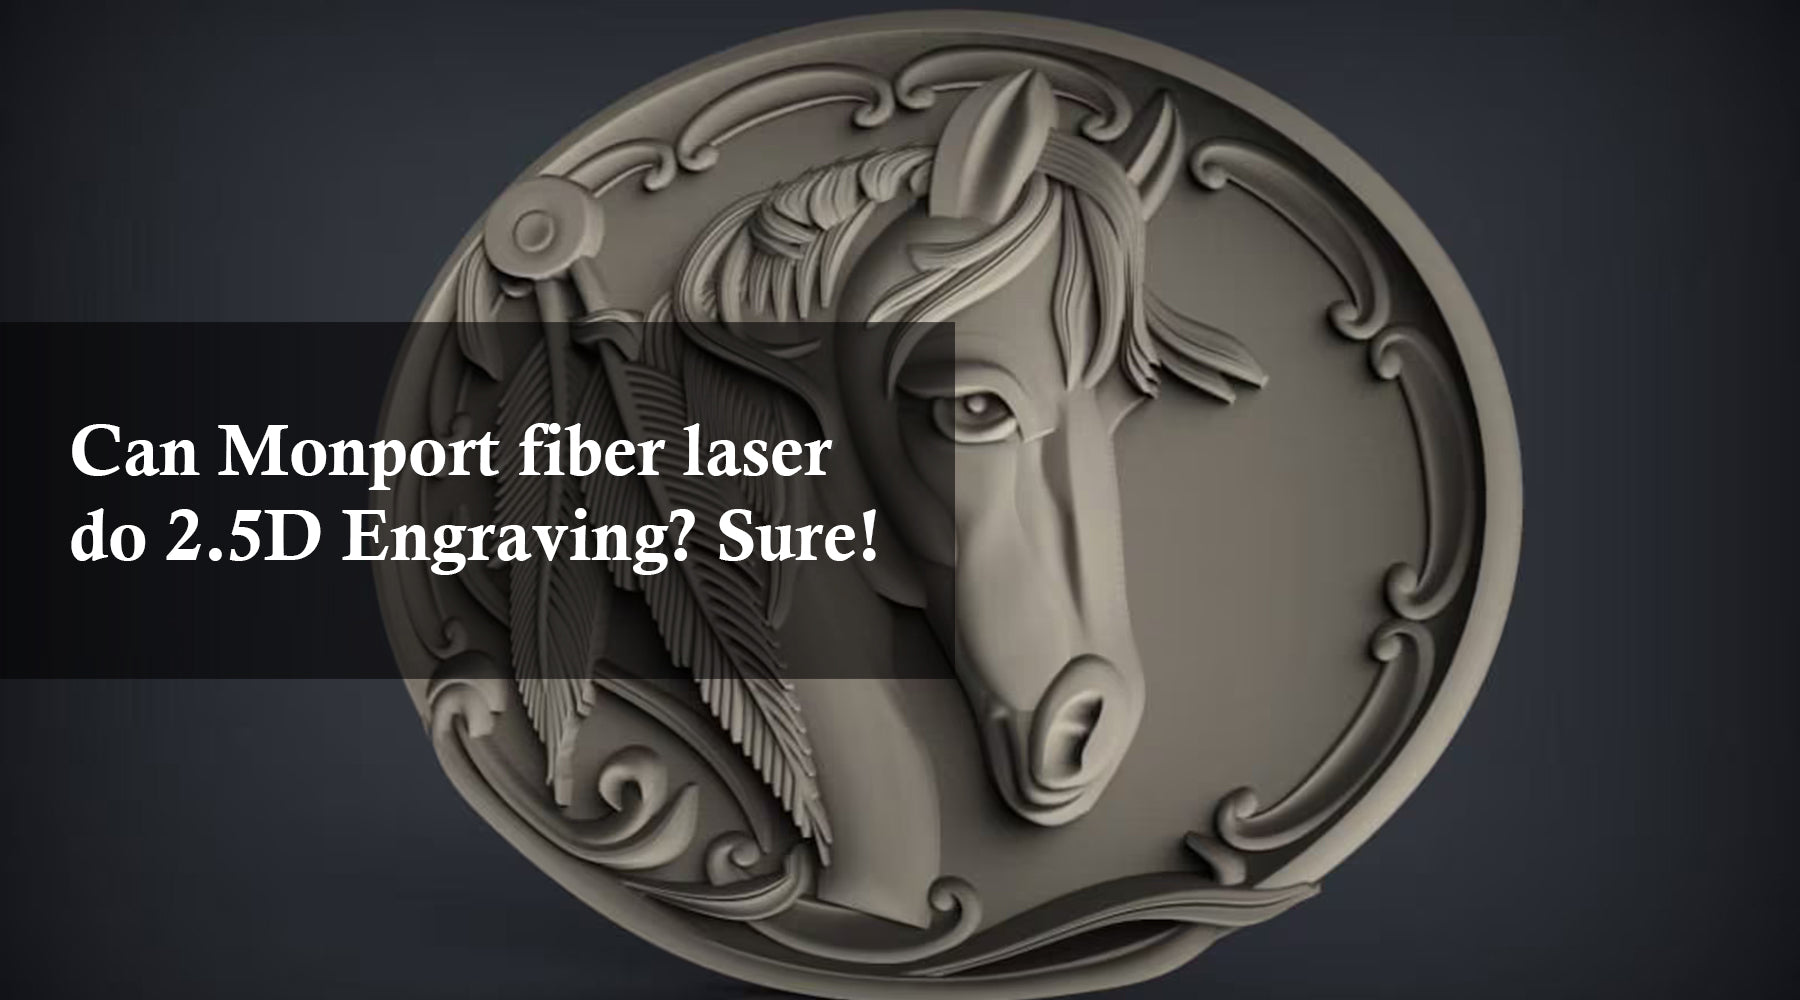 Can Monport fiber laser do 2.5D Engraving? Sure!